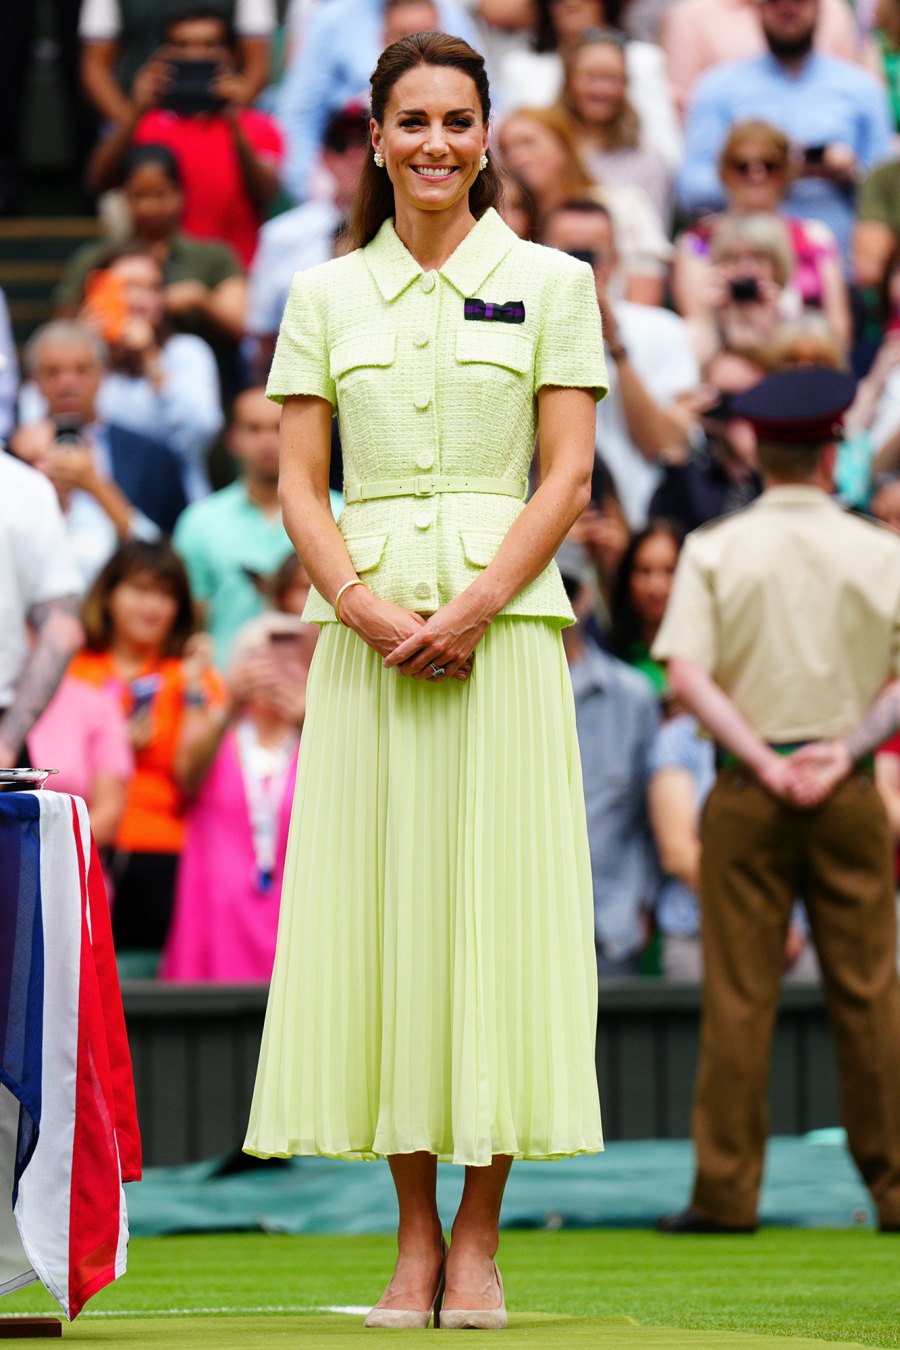 Princess Kate’s Lime Green Wimbledon Dress Perfectly Matches the Game’s Tennis Balls